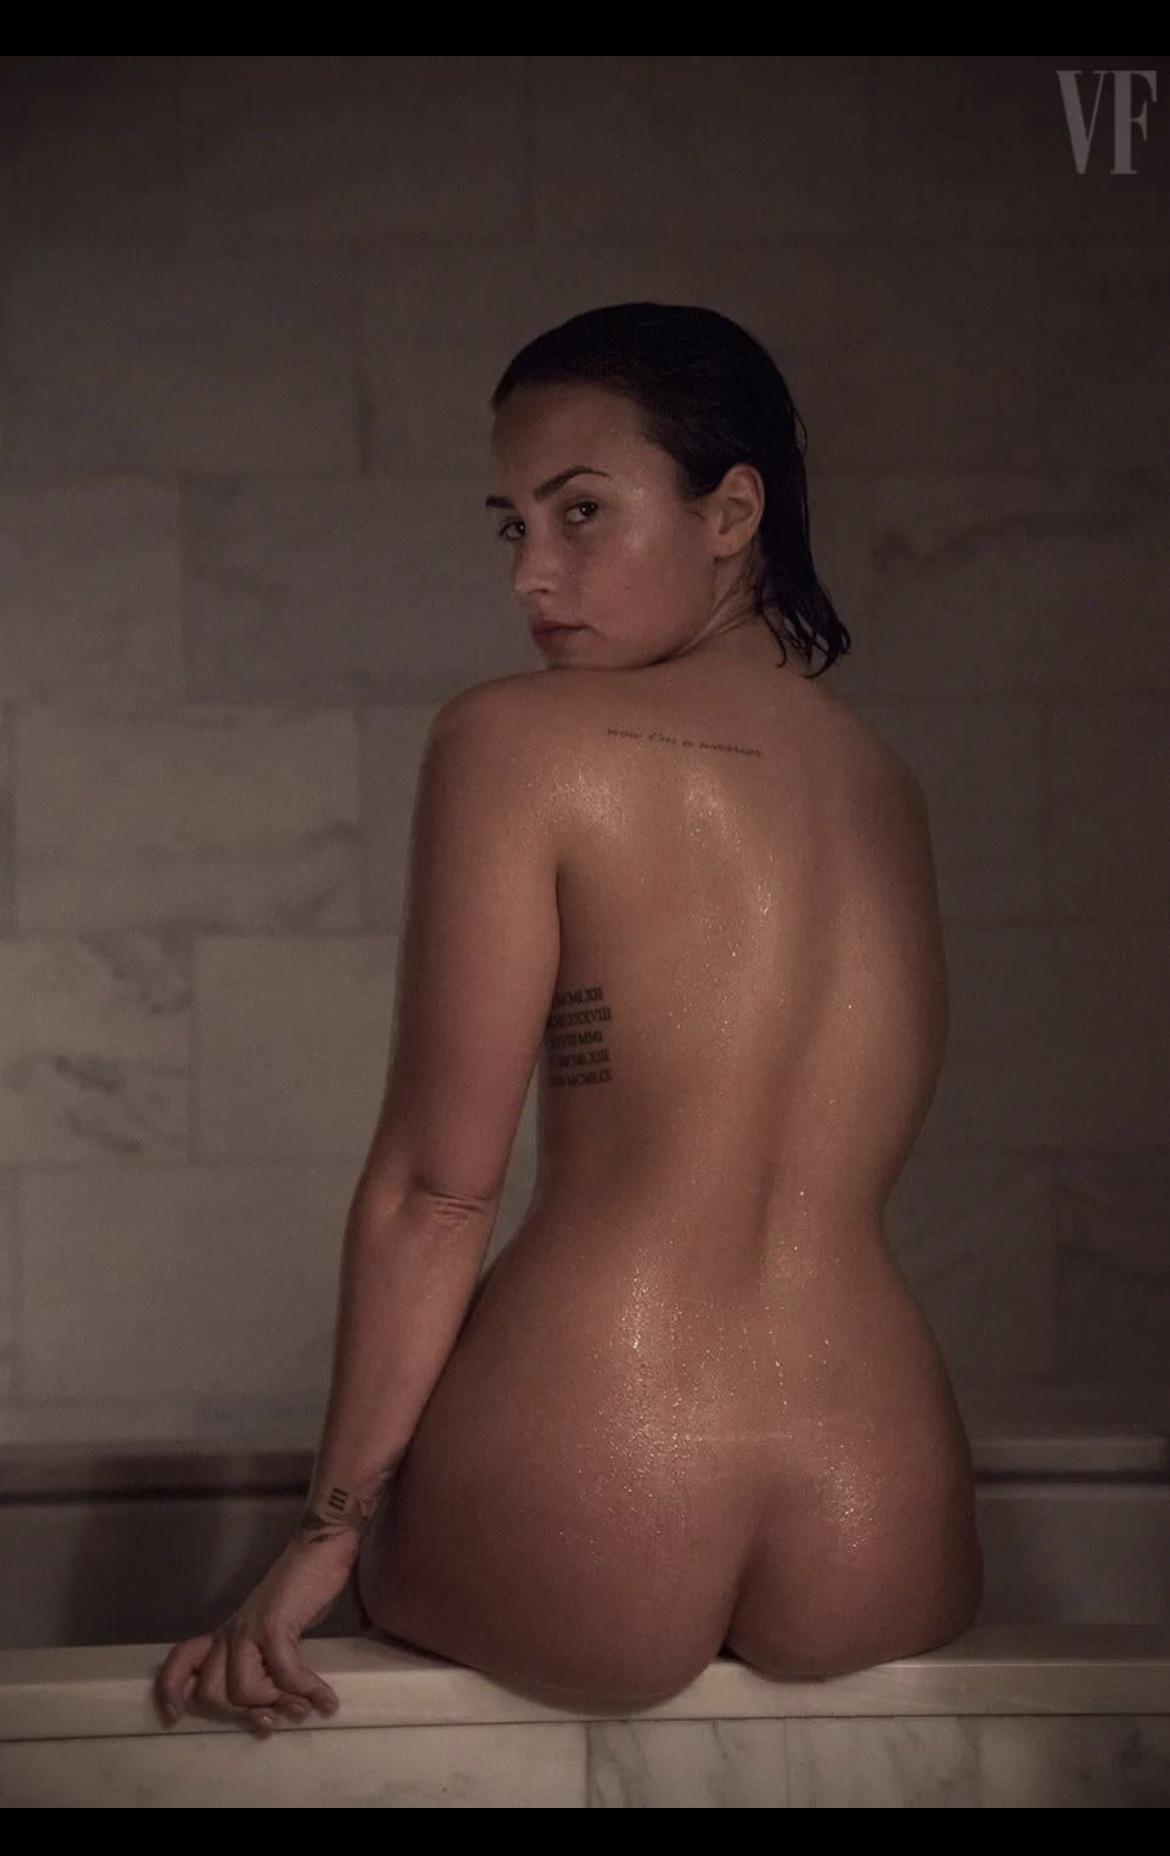 Demo Lovato has a nice ass